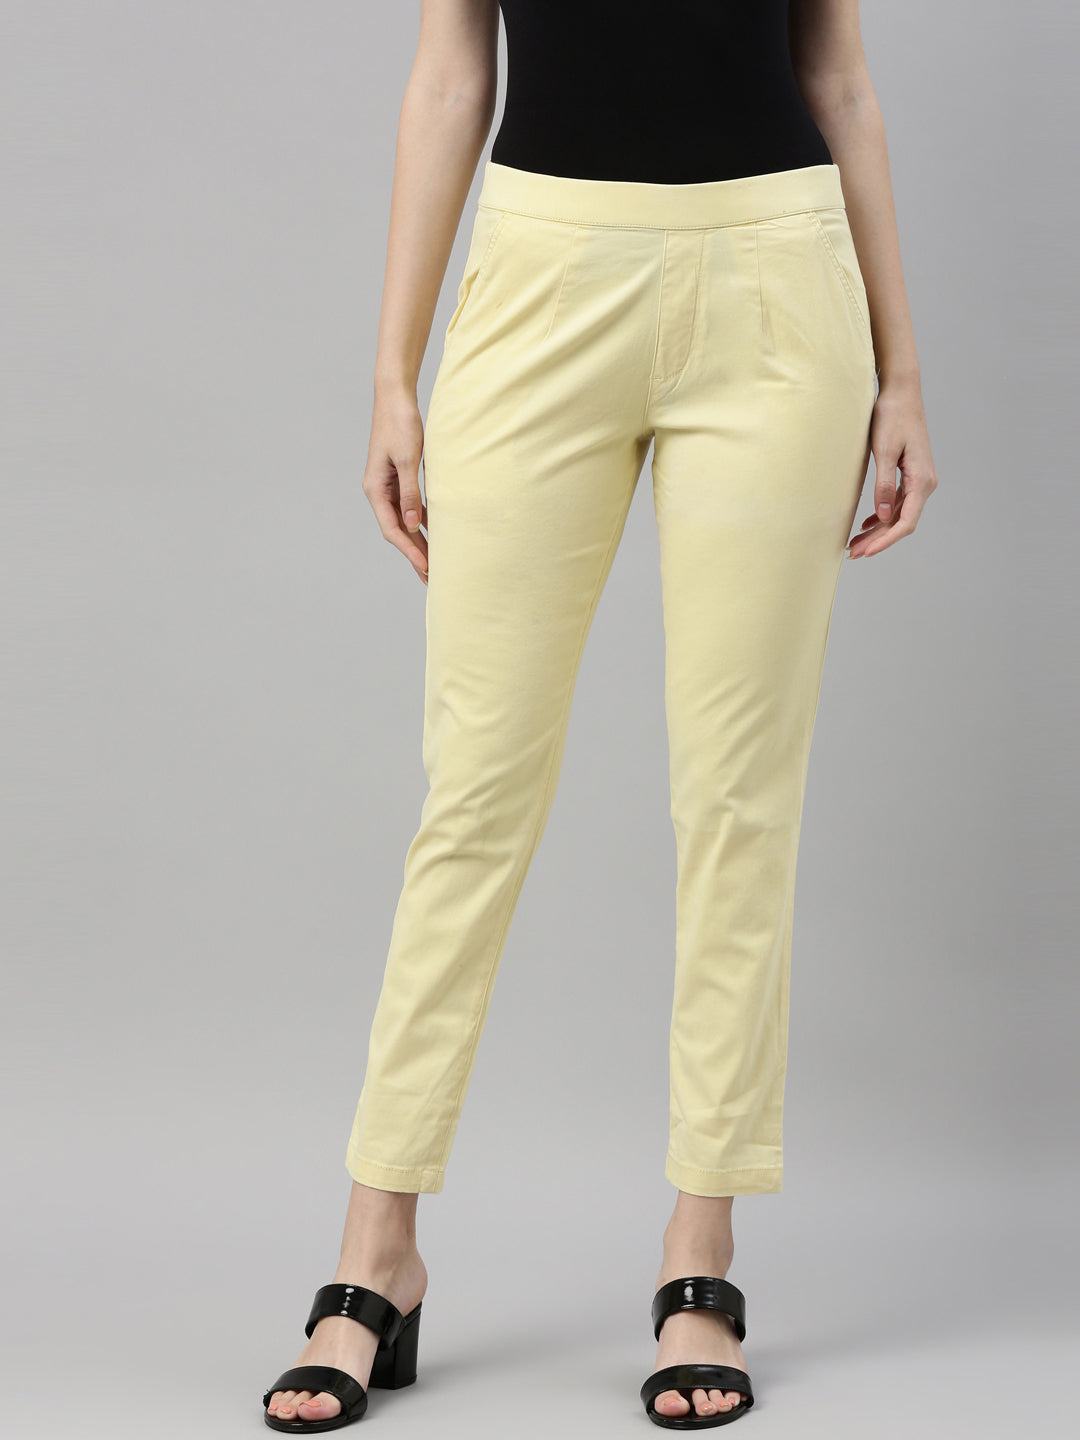 Women's Bright Yellow Mid-Rise Cotton Denim Stretch Pants